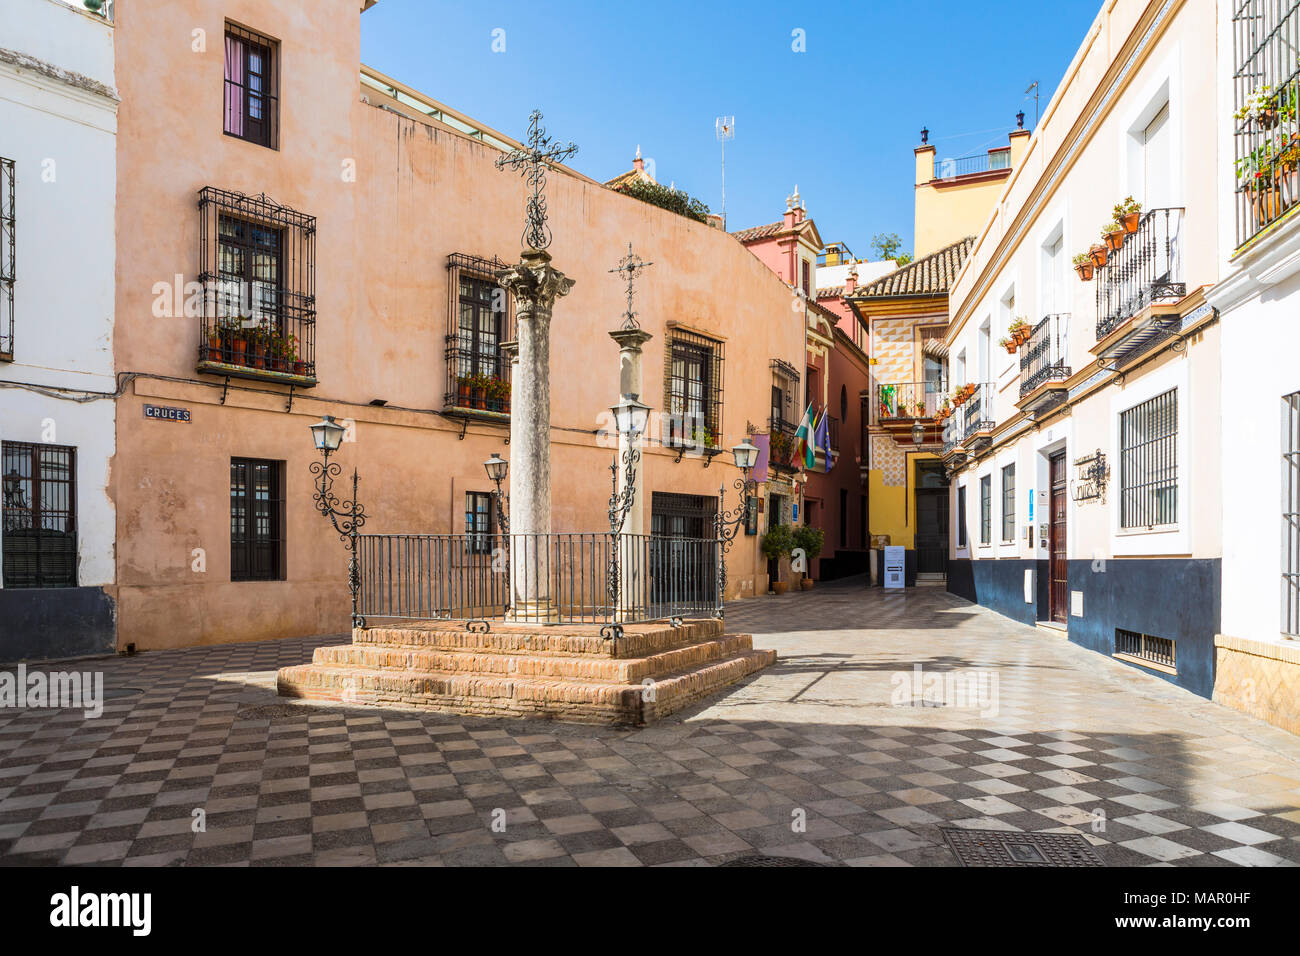 Plaza De Las Cruces, Santa Cruz district, Seville, Andalusia (Andalucia),  Spain, Europe Stock Photo - Alamy